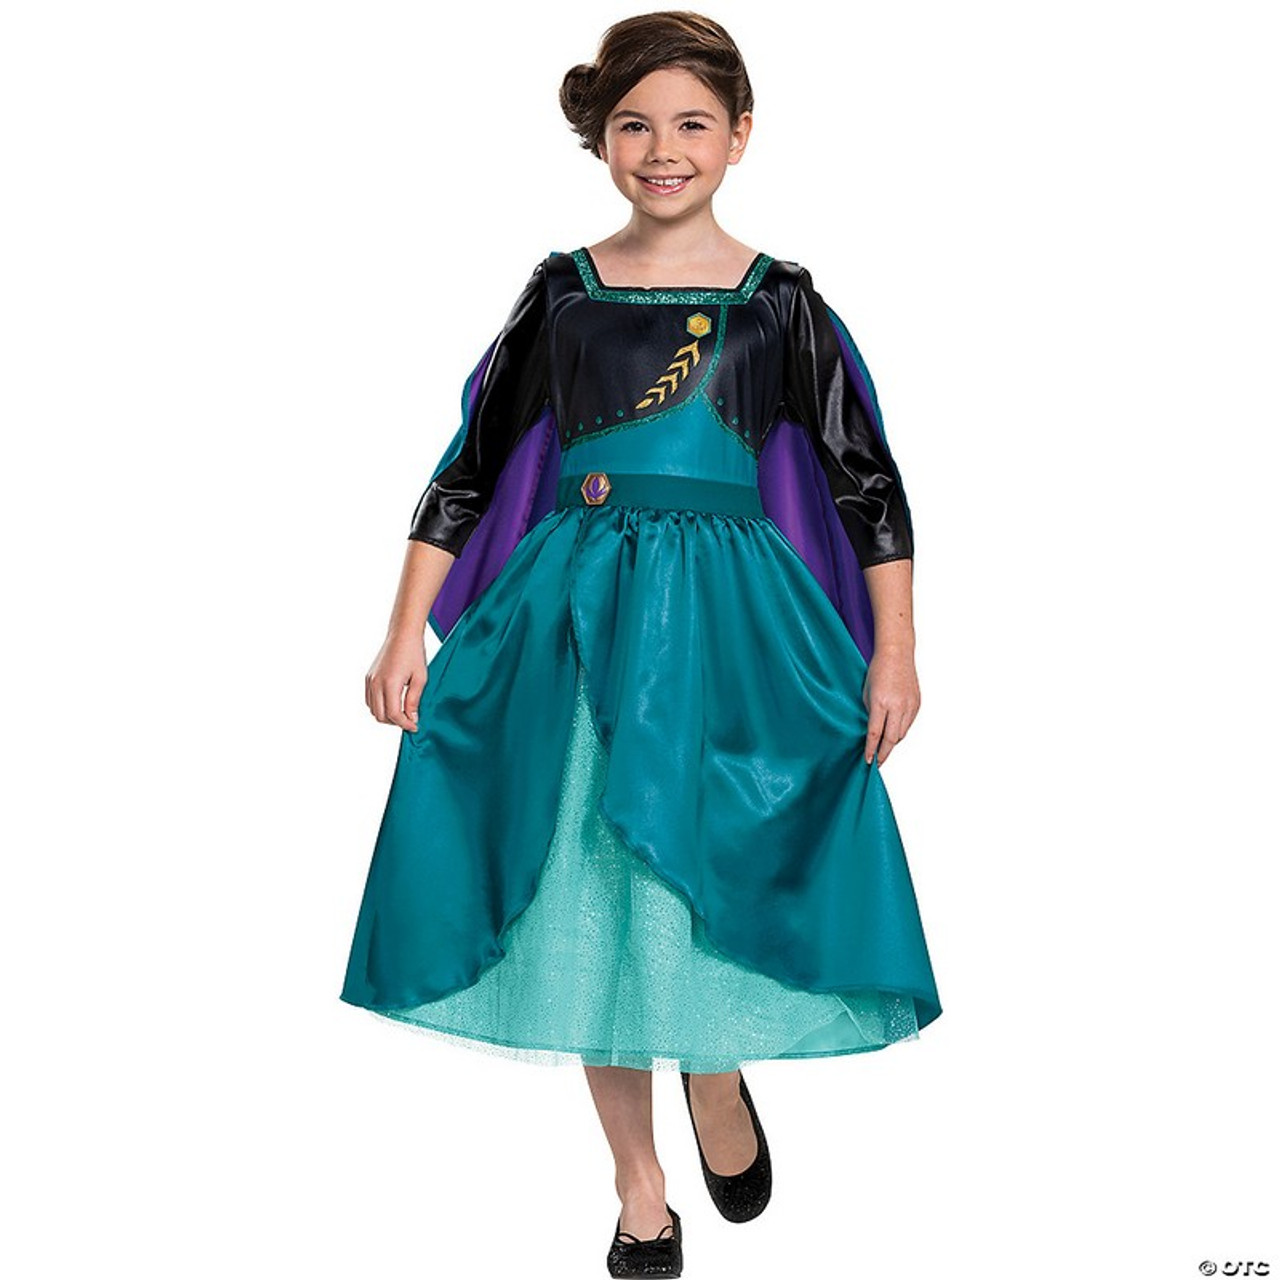 Toddler Queen Anna Classic Costume